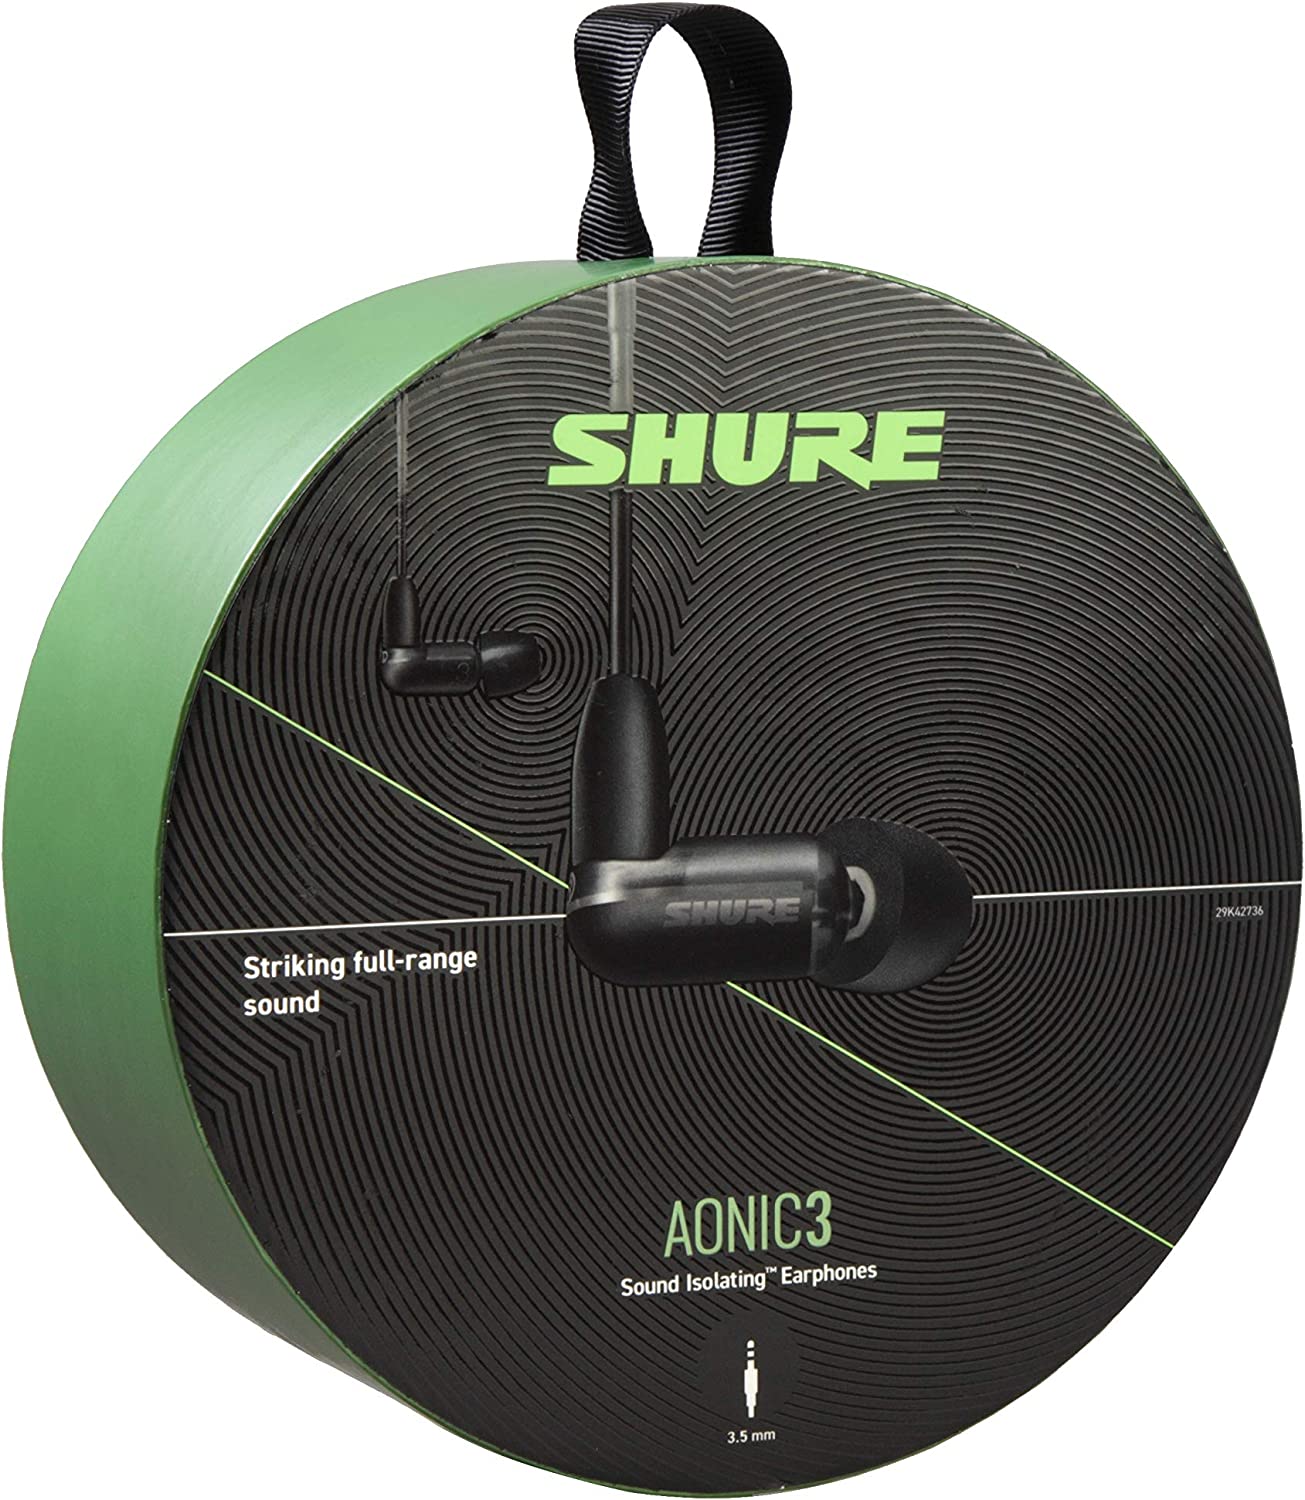 SHURE AONIC 3 SOUND ISOLATING EARPHONES - BLACK